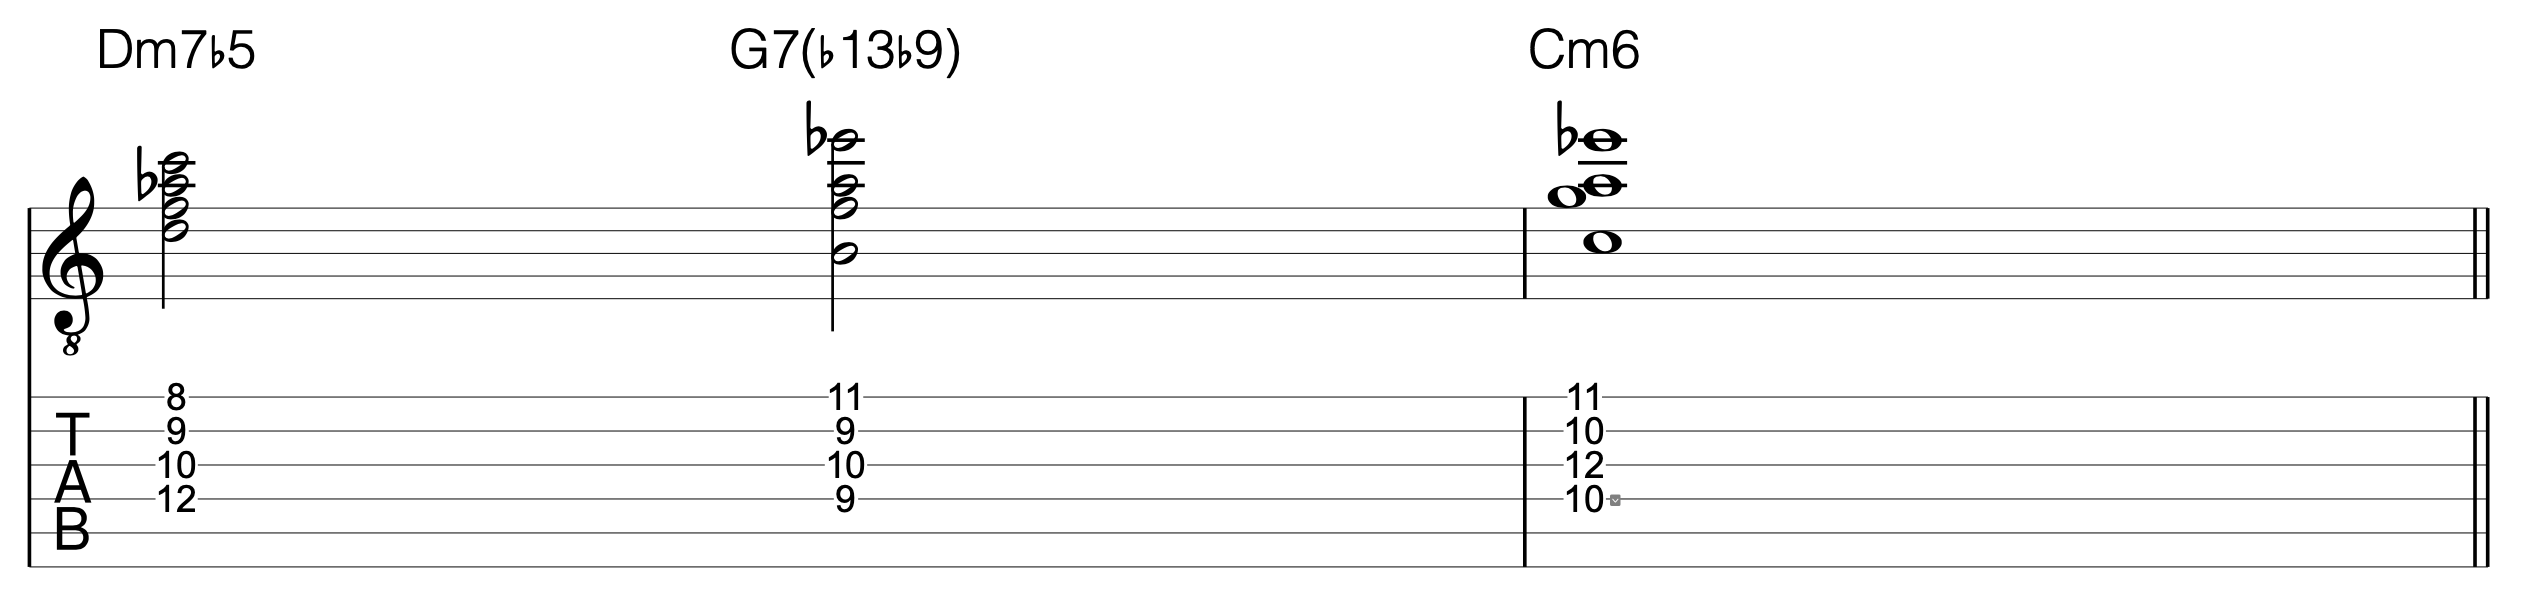 2 5 1 chord progressions guitar